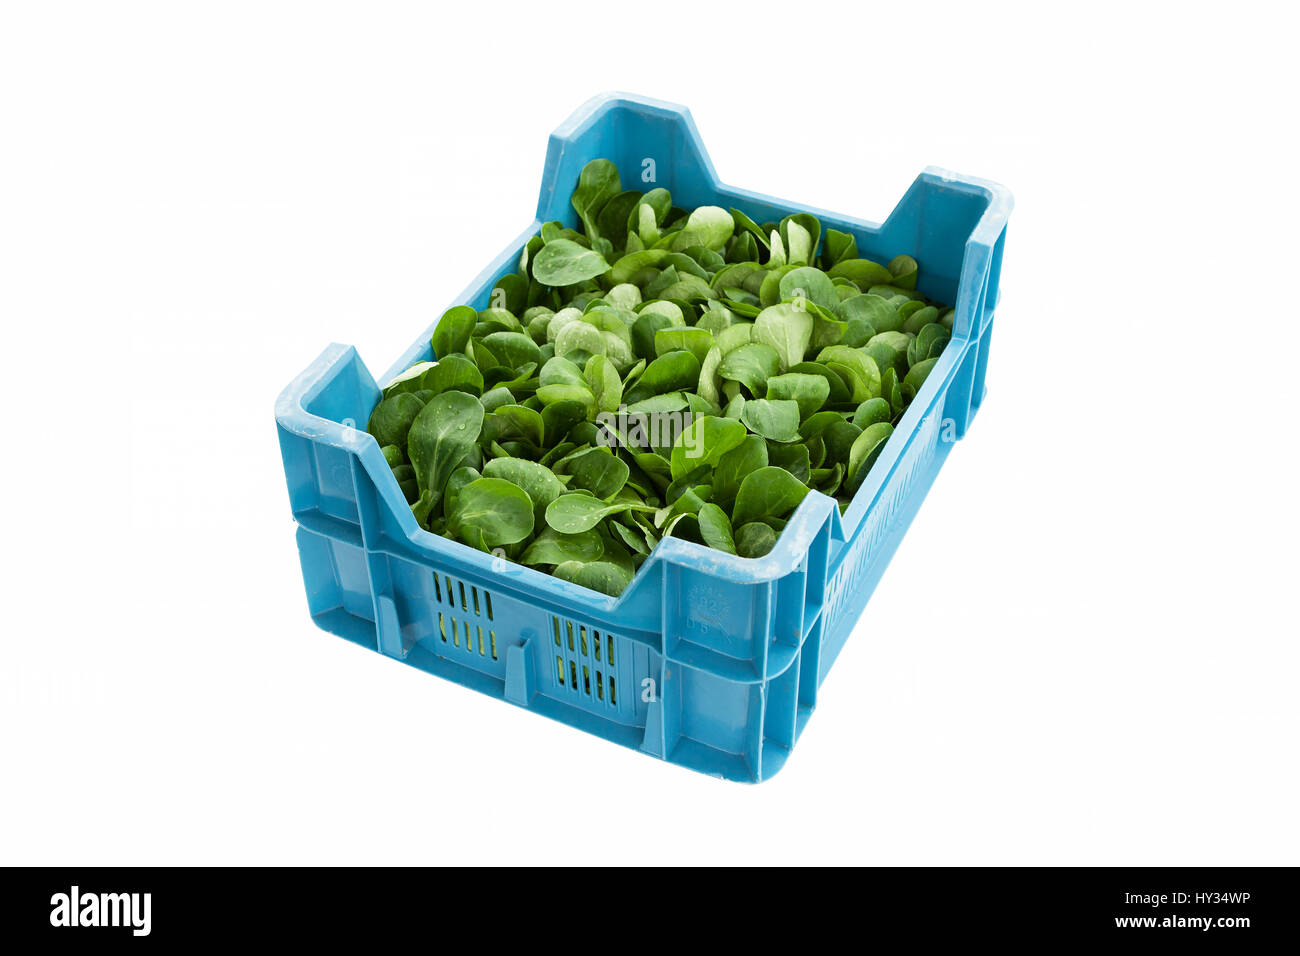 A crate full of freshly picked organic Corn Salad - Valerianella locusta. Stock Photo